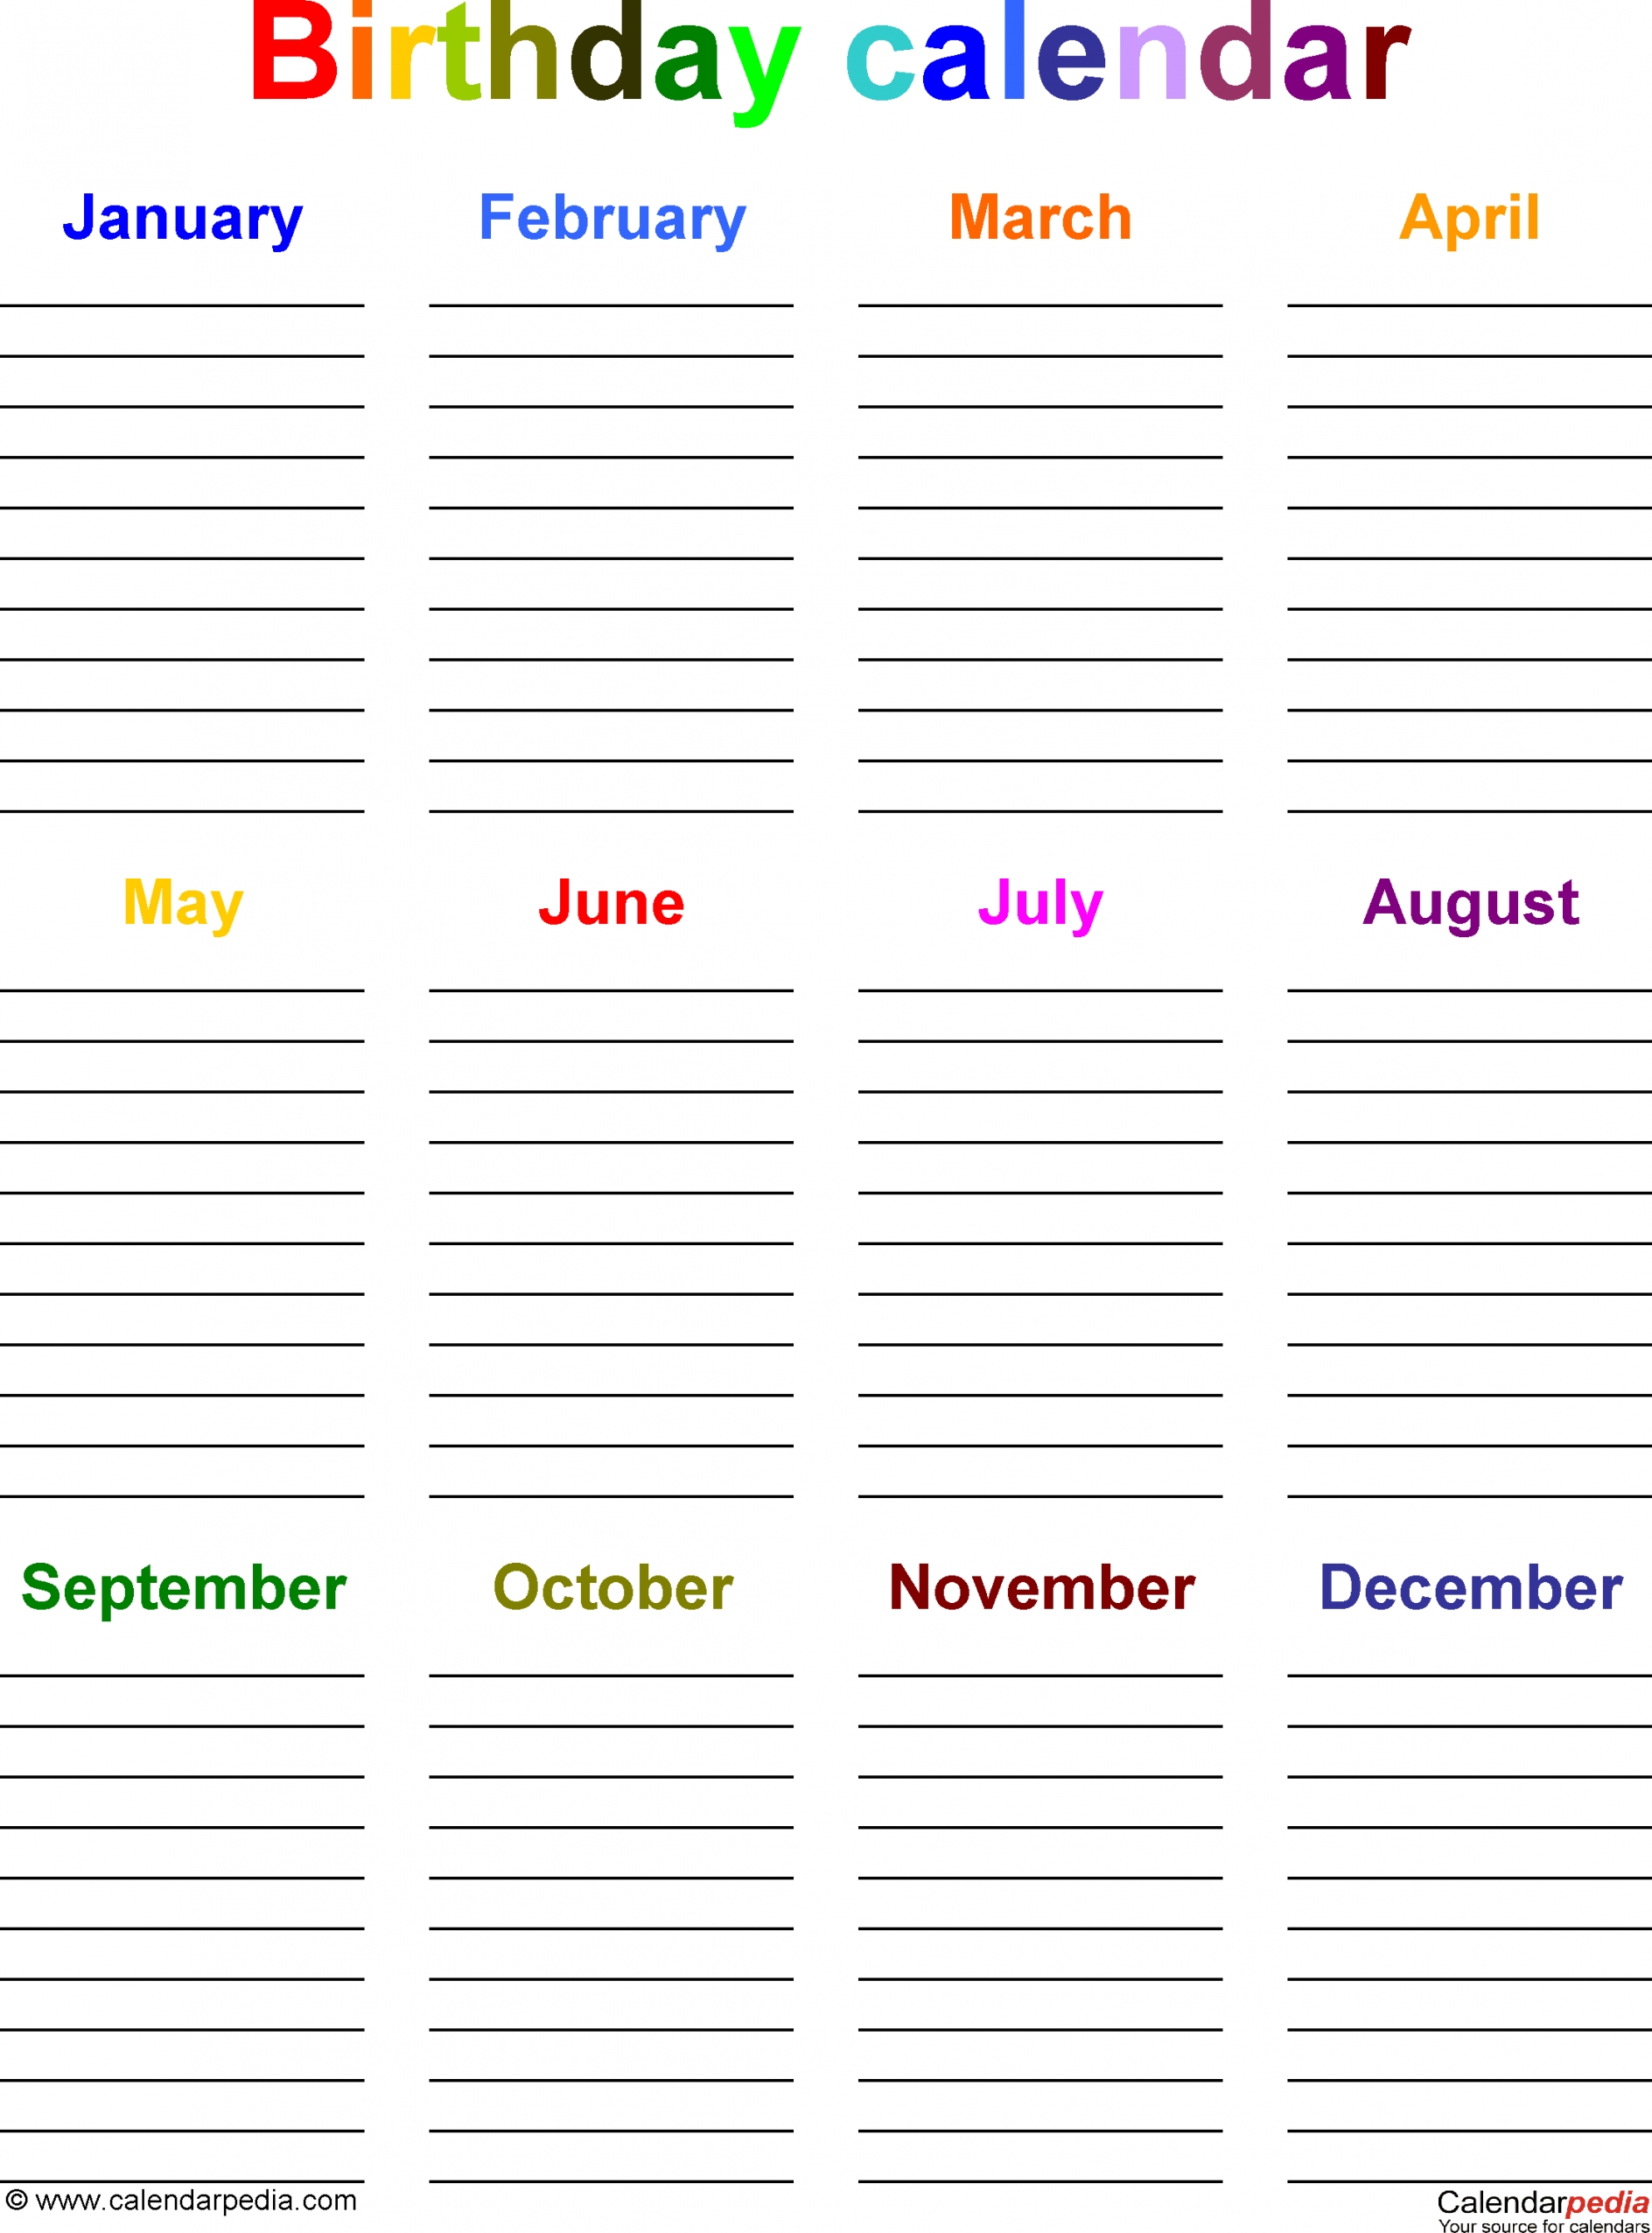 Birthday Calendar List Template